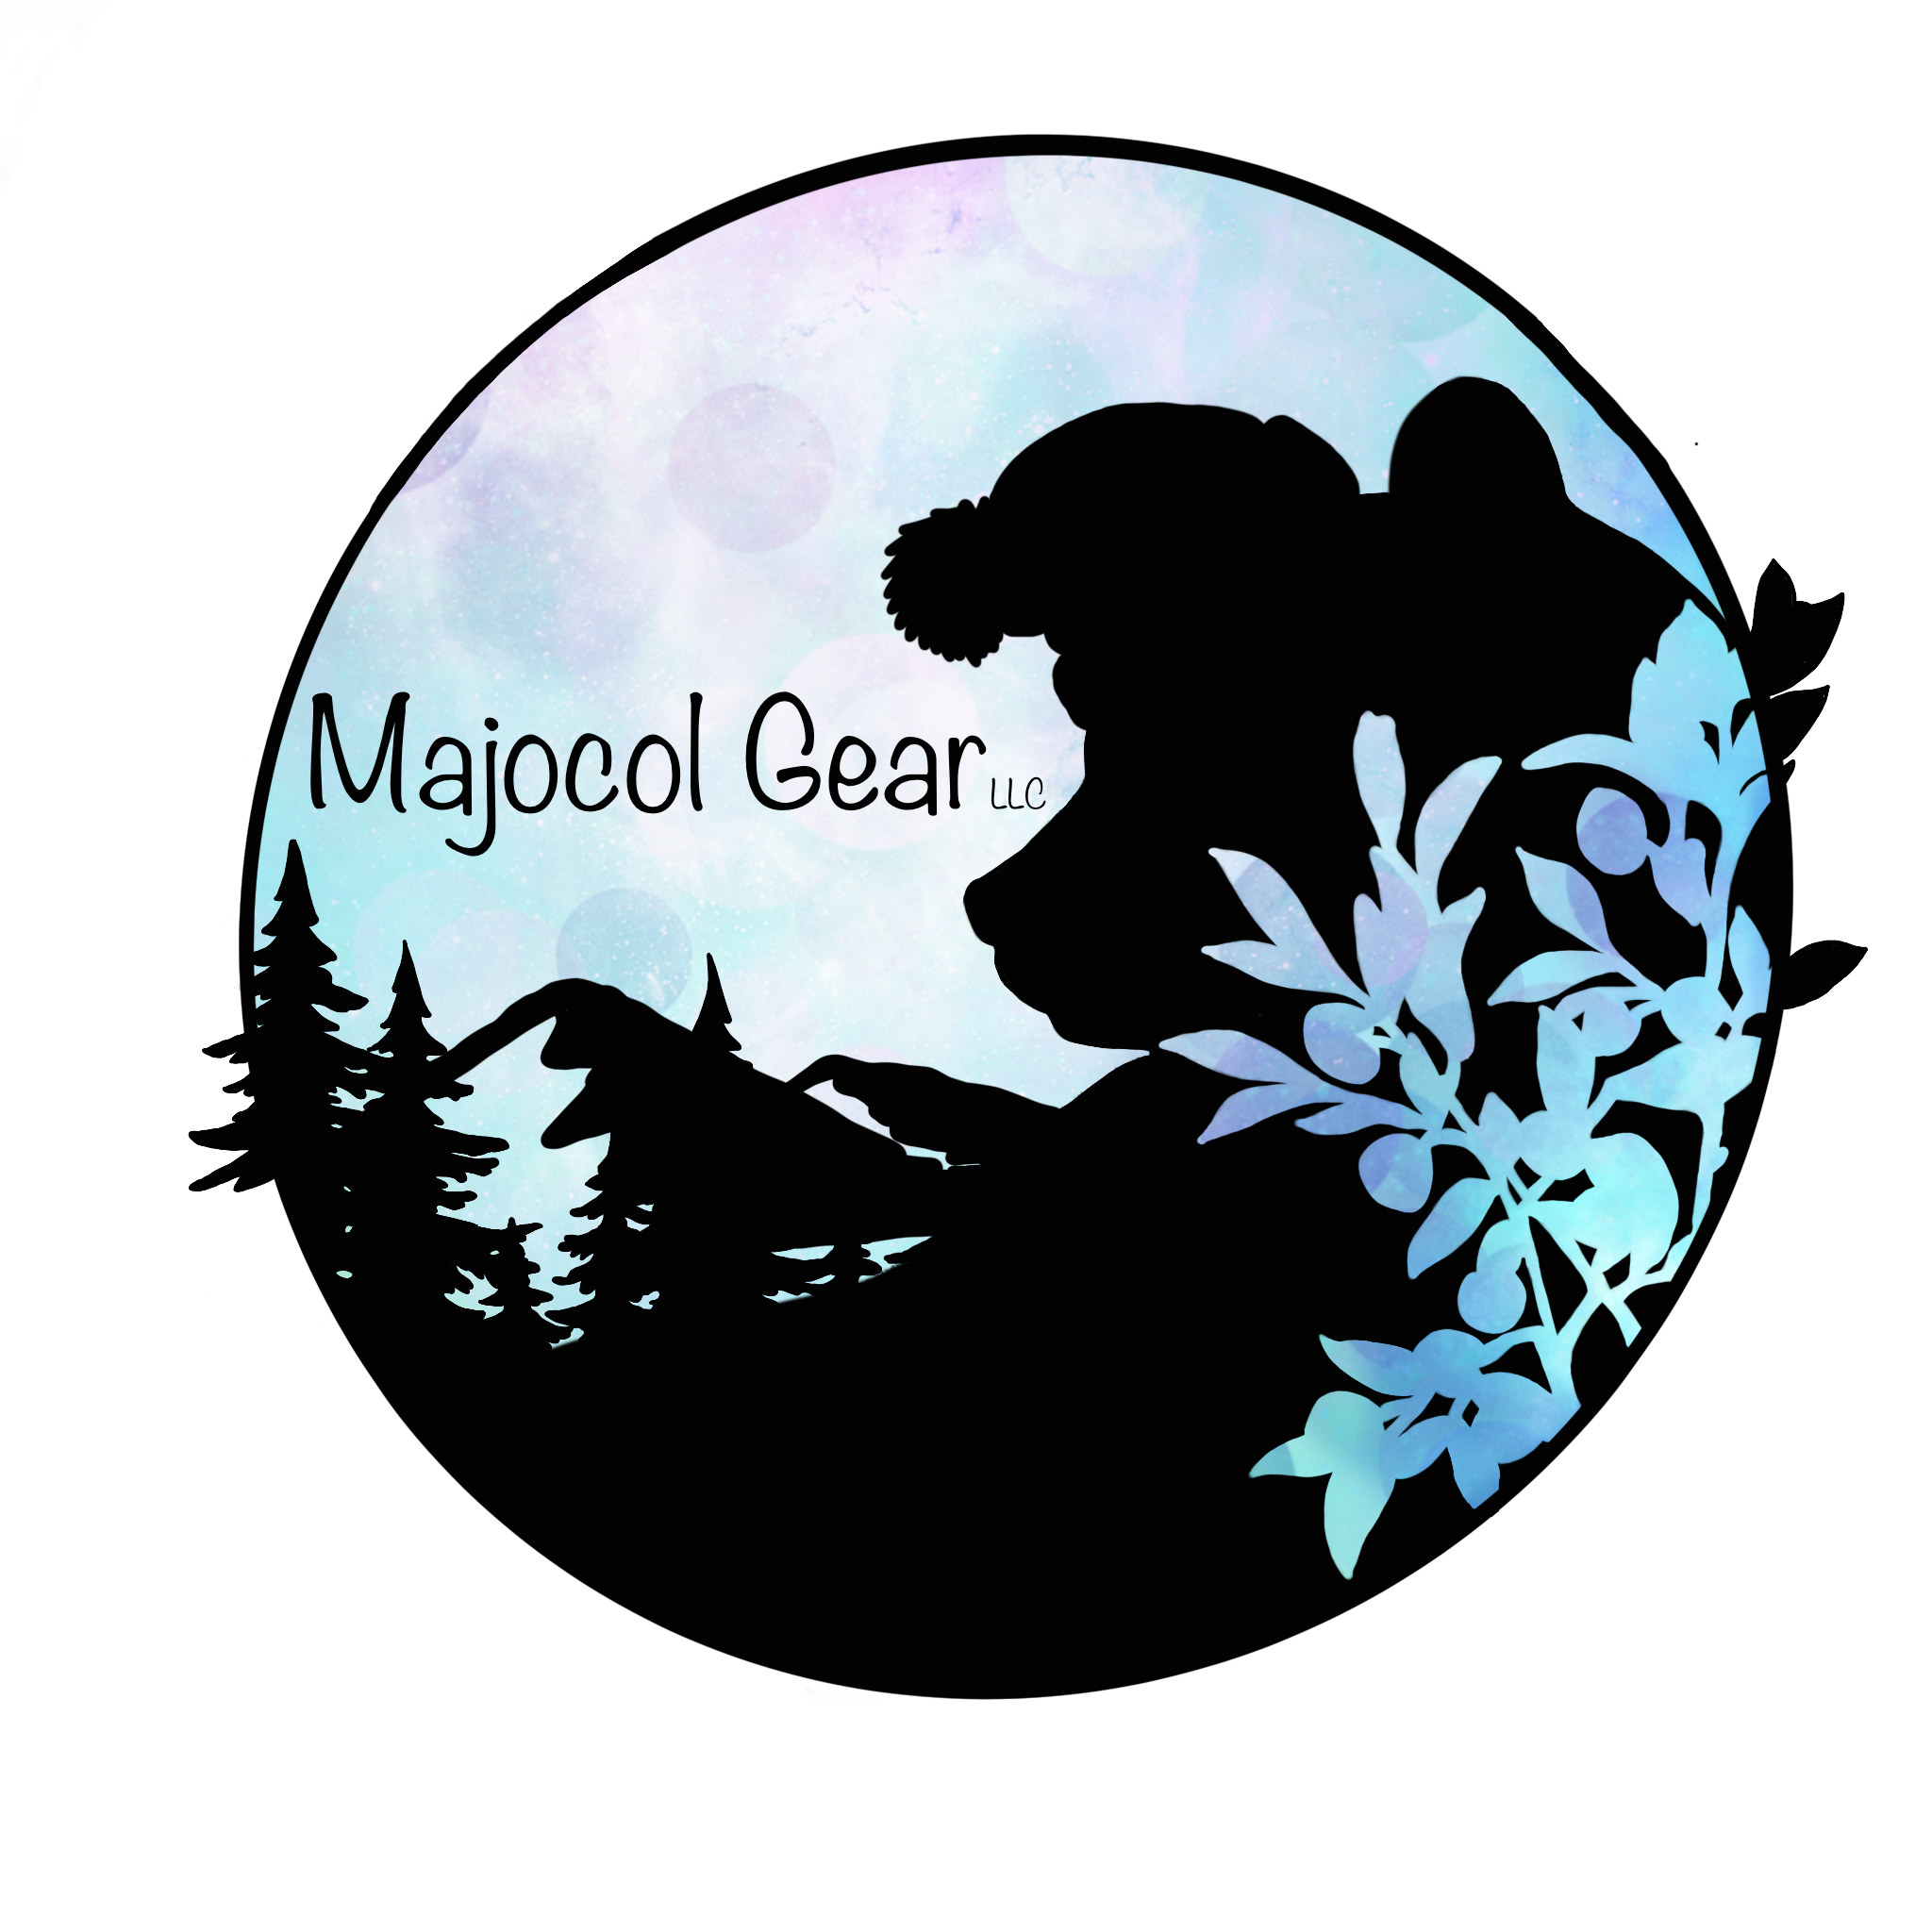 Majocol Gear LLC